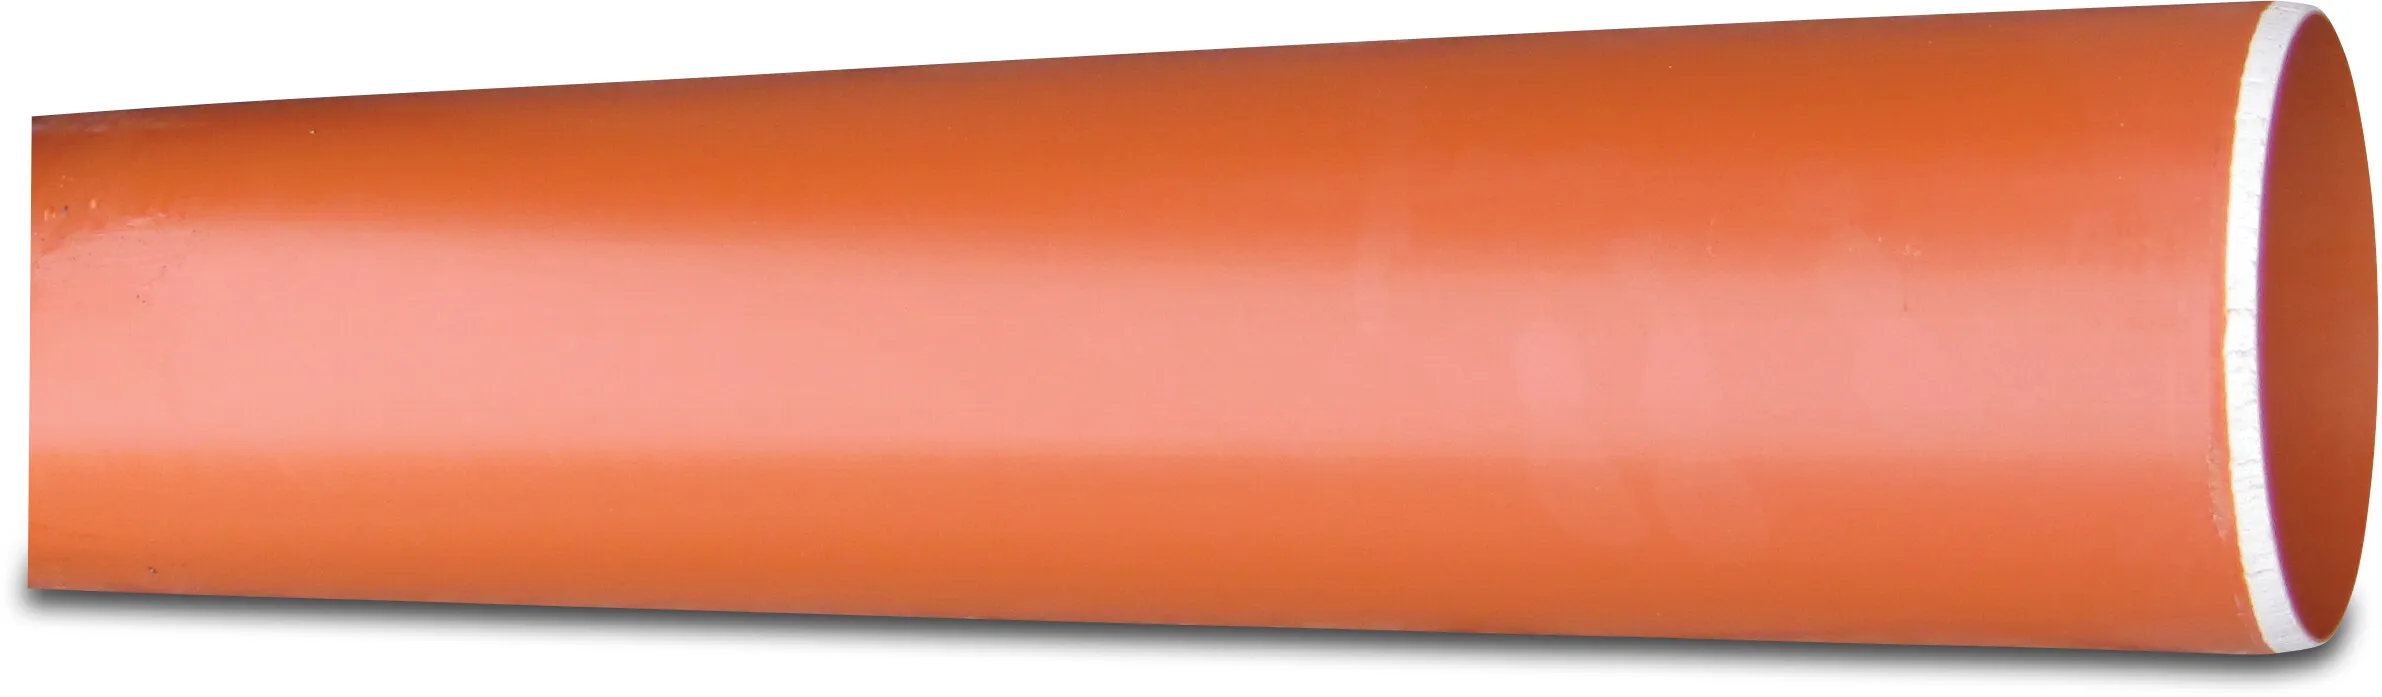 Drainage pipe PVC-U 110 mm x 3,2 mm SN4 plain redbrown 5m KOMO/BENOR